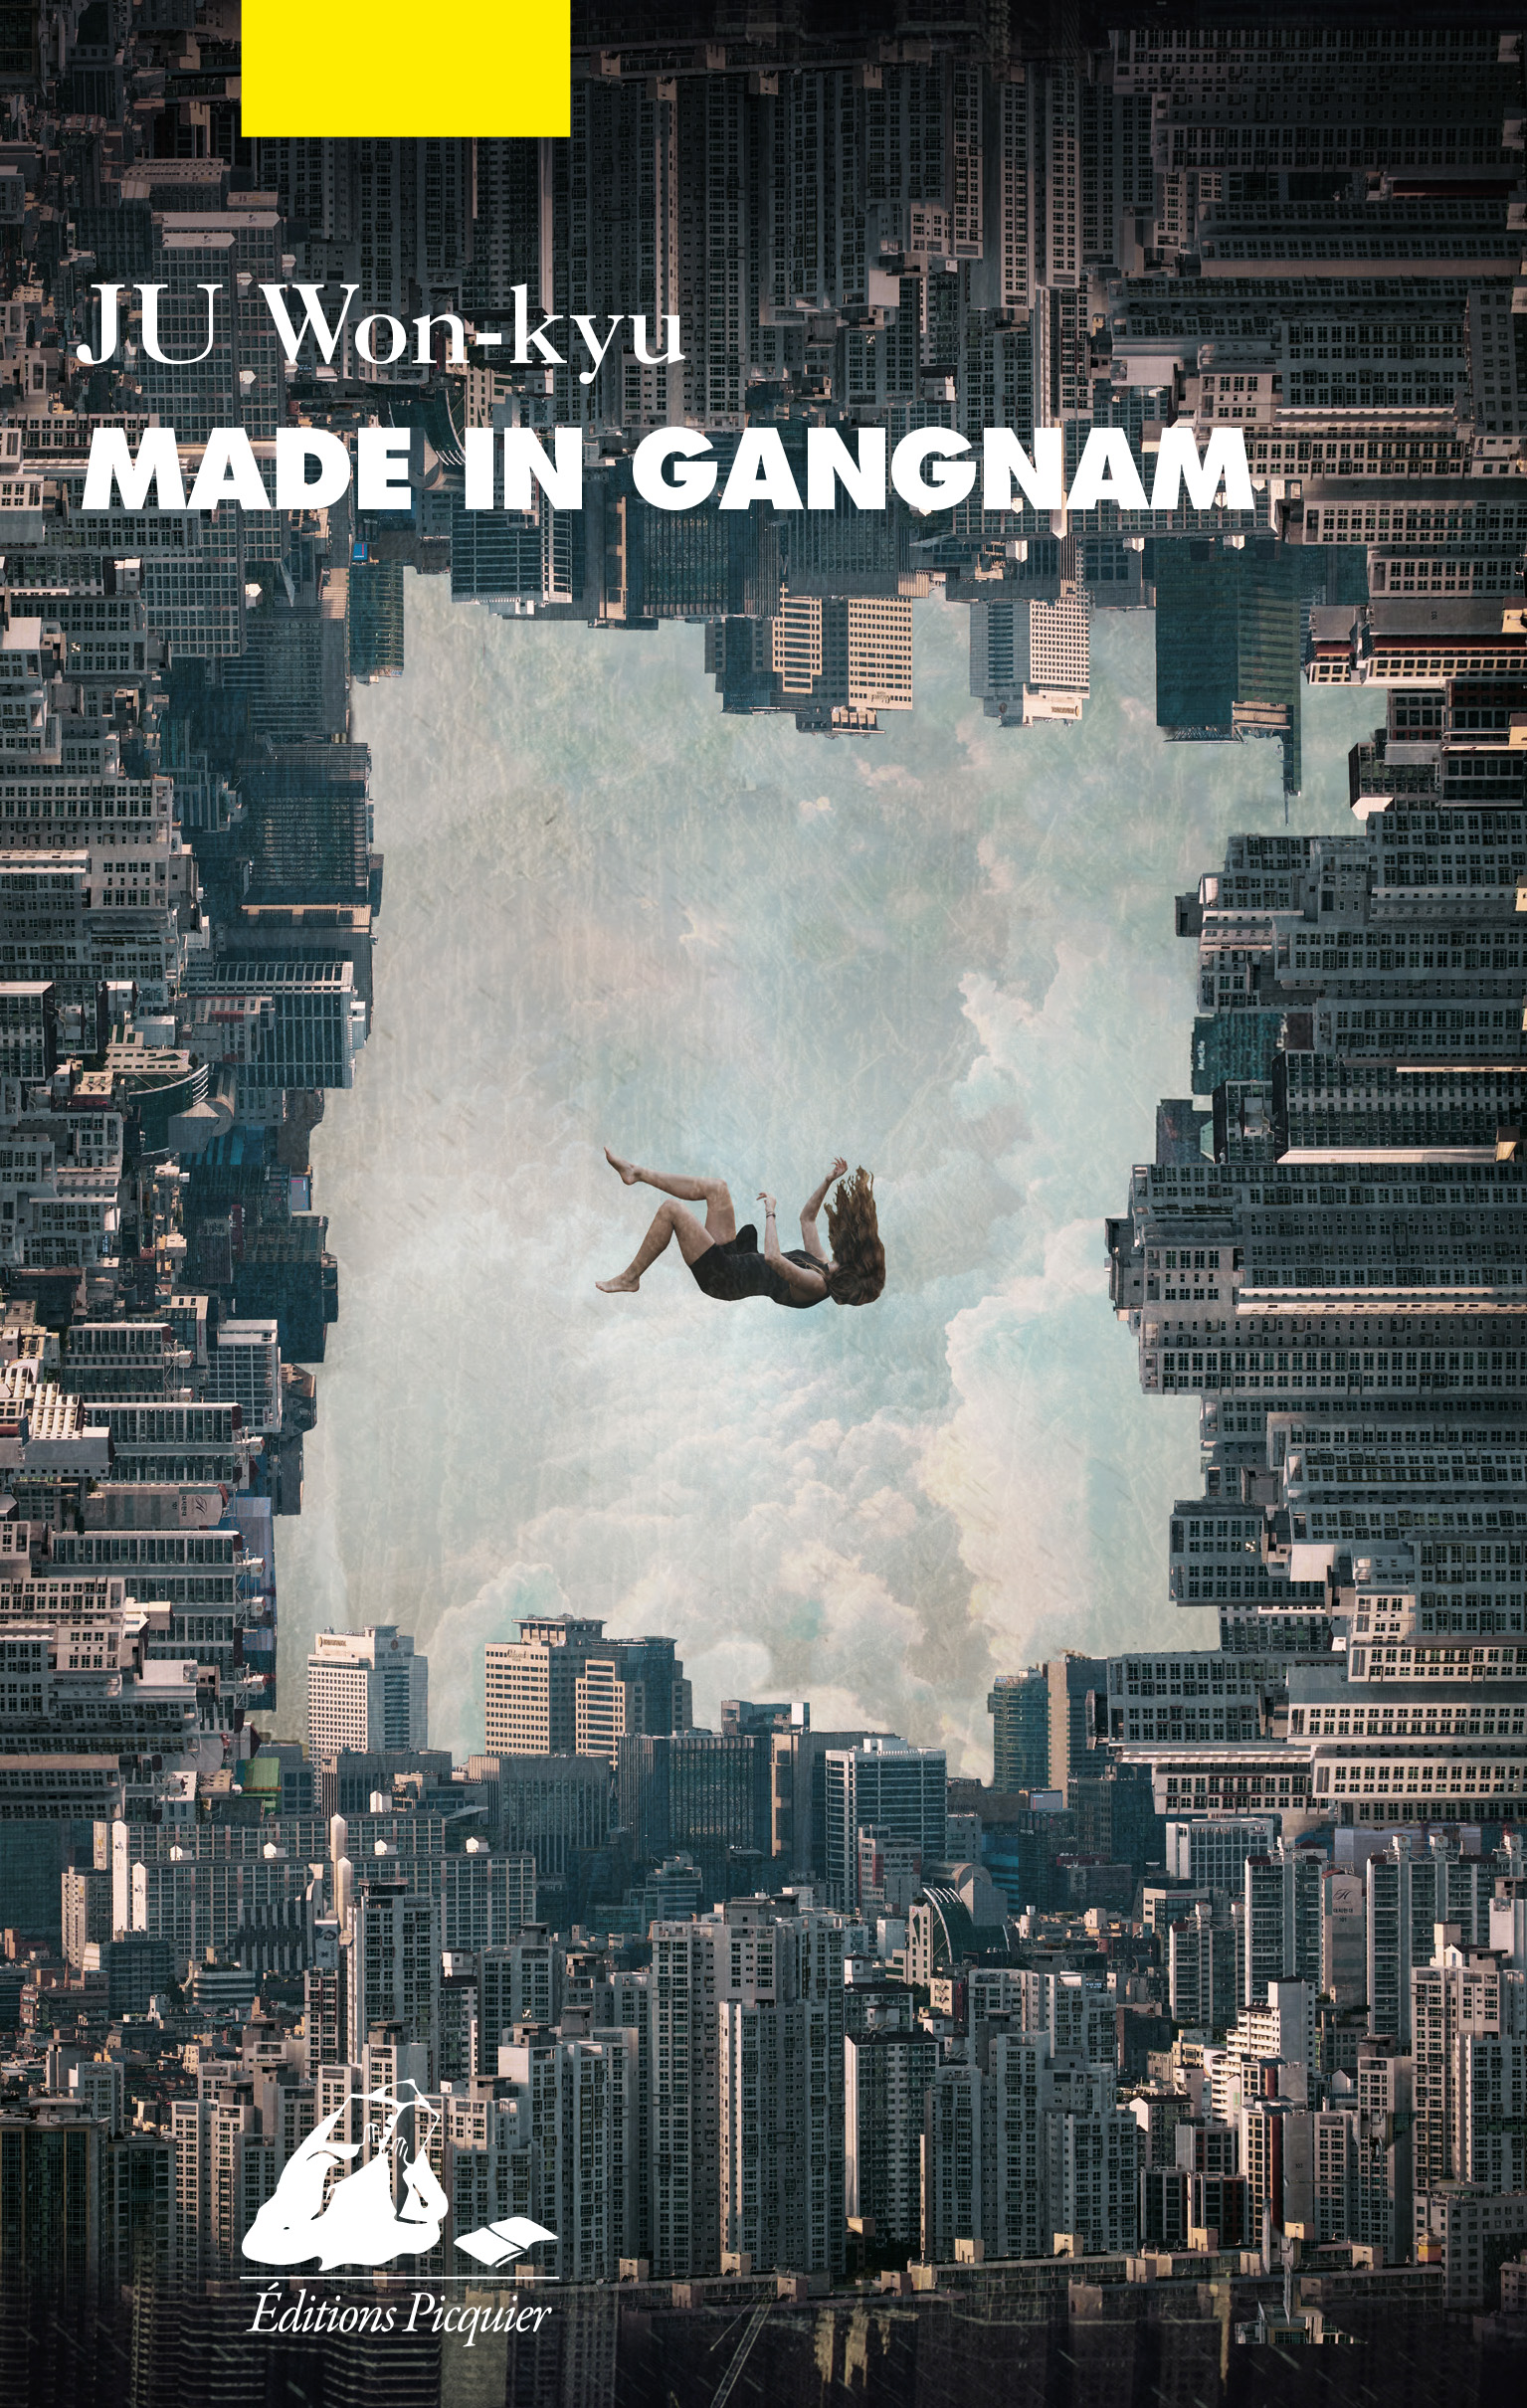 Afficher "Made in Gangnam"